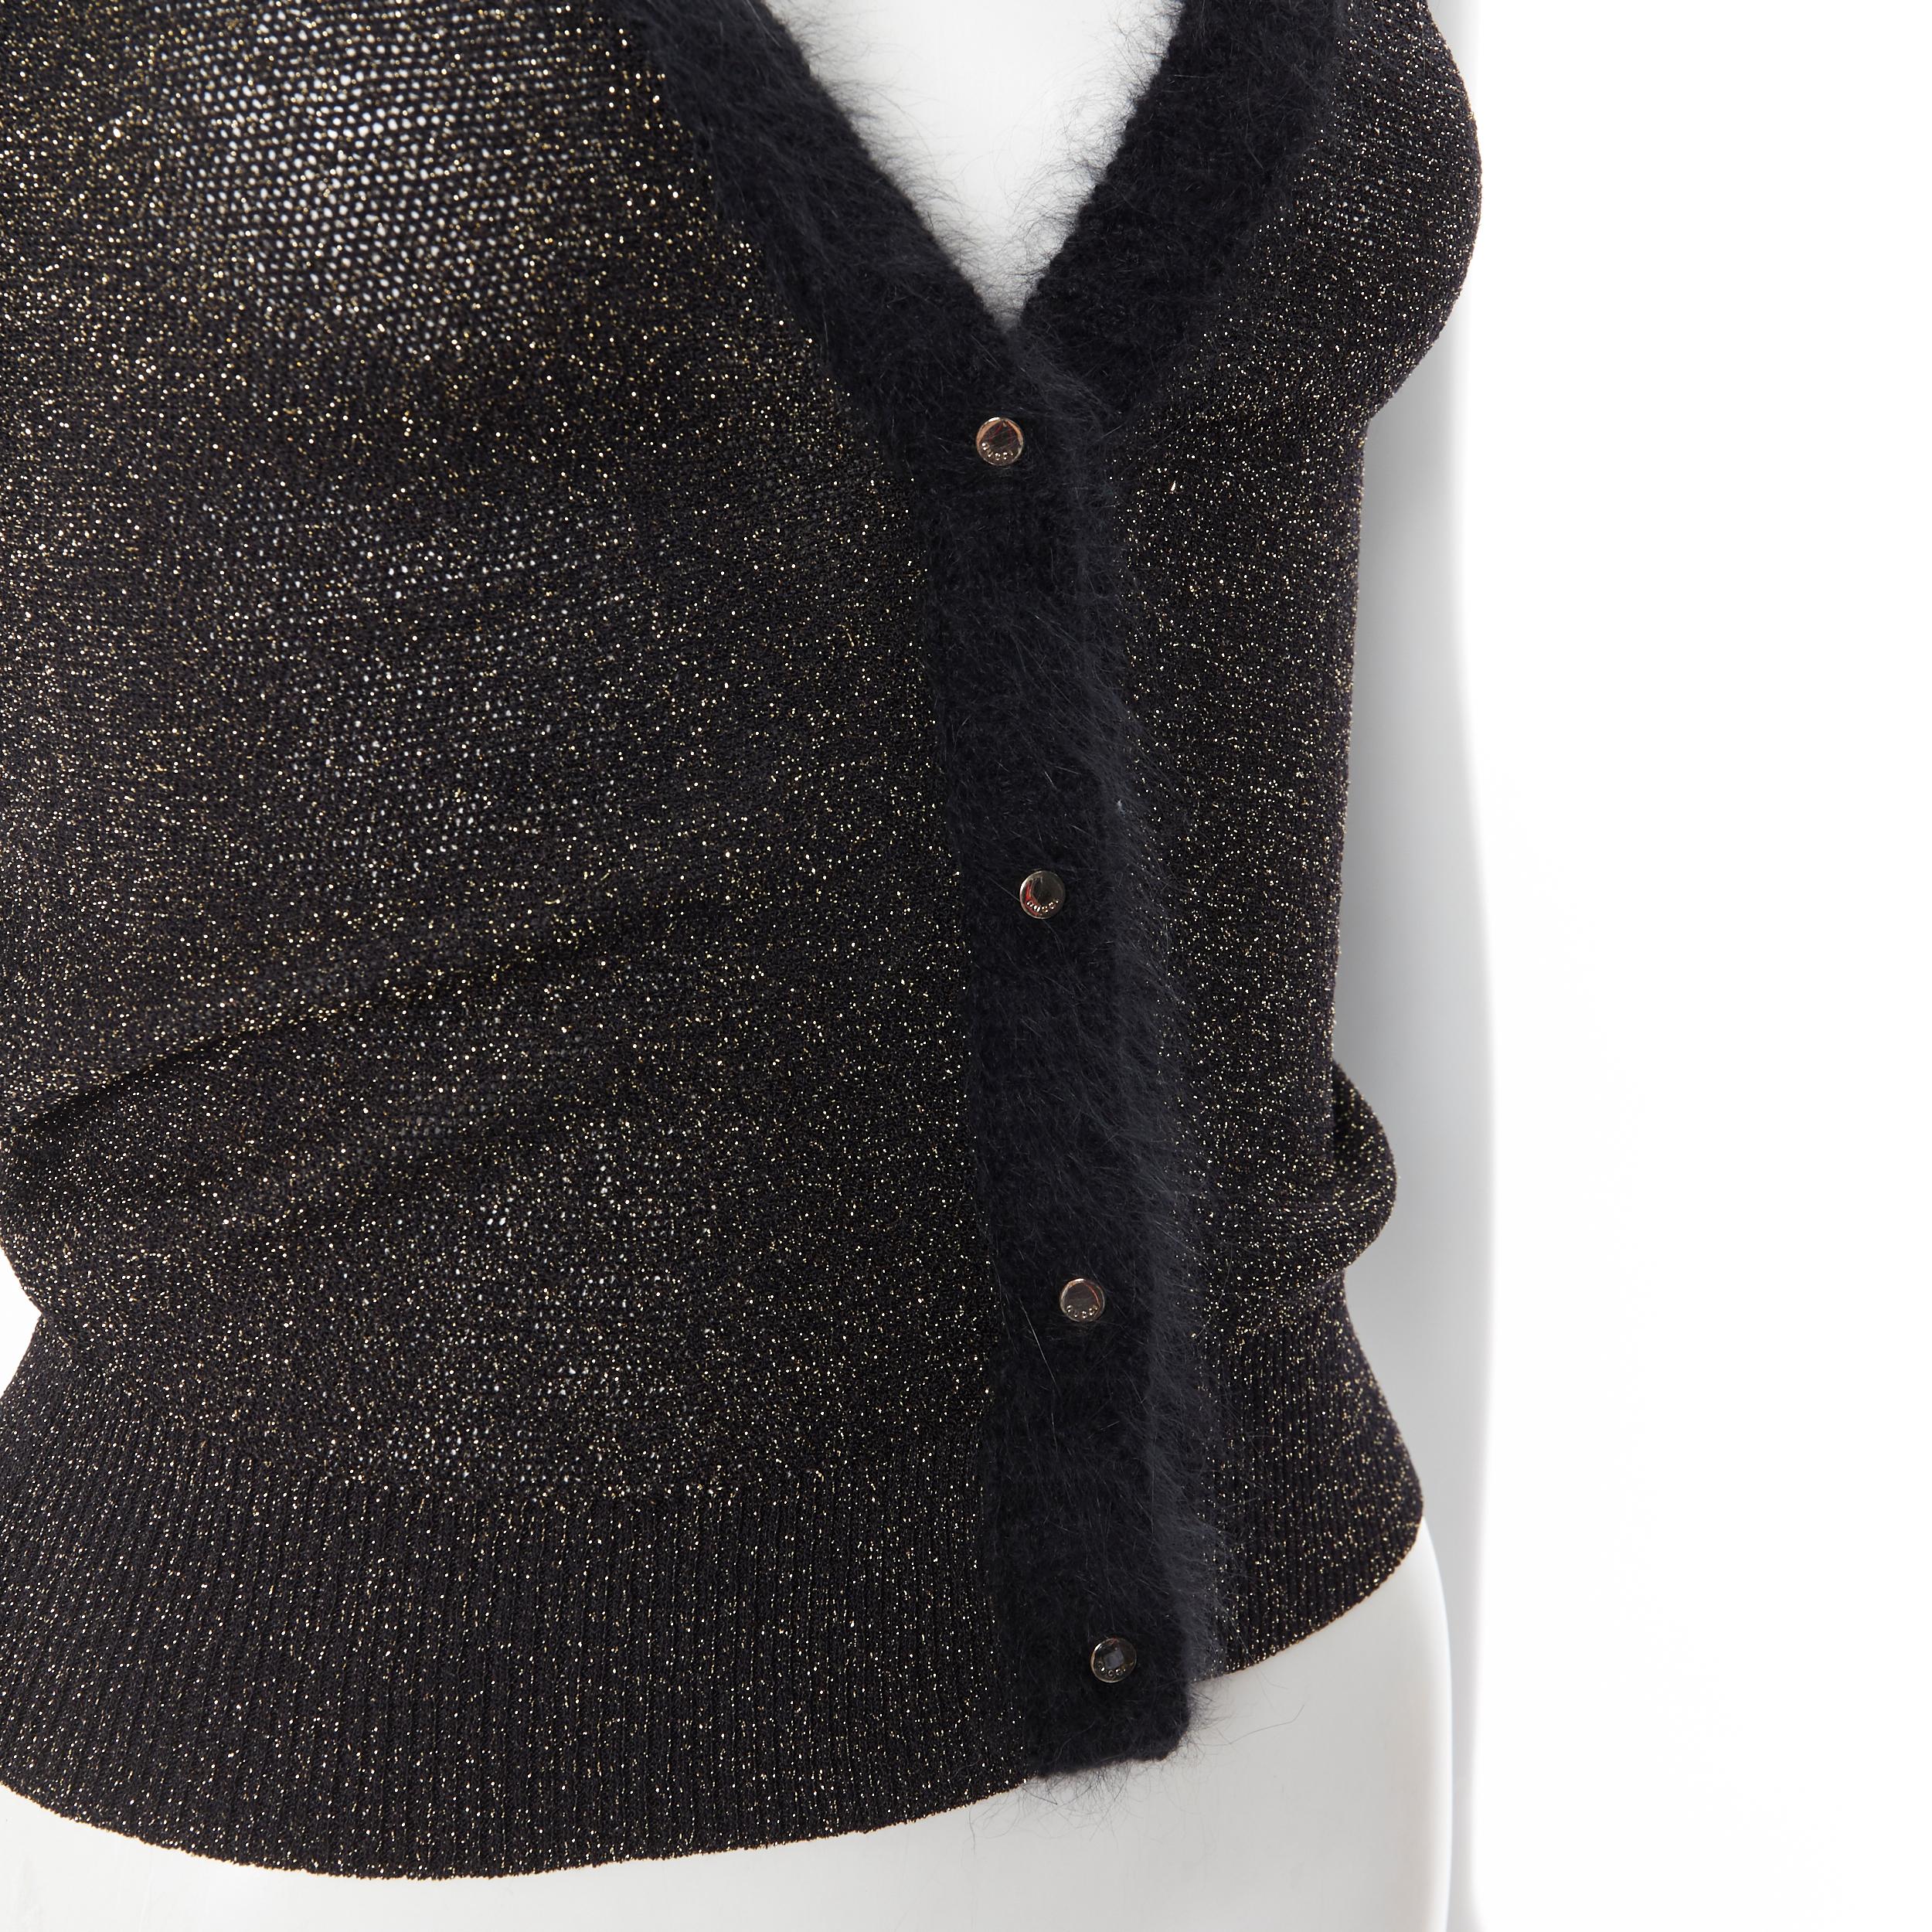 GUCCI black gold lurex shimmer alpaca trim cap sleeve cardigan sweater S 1